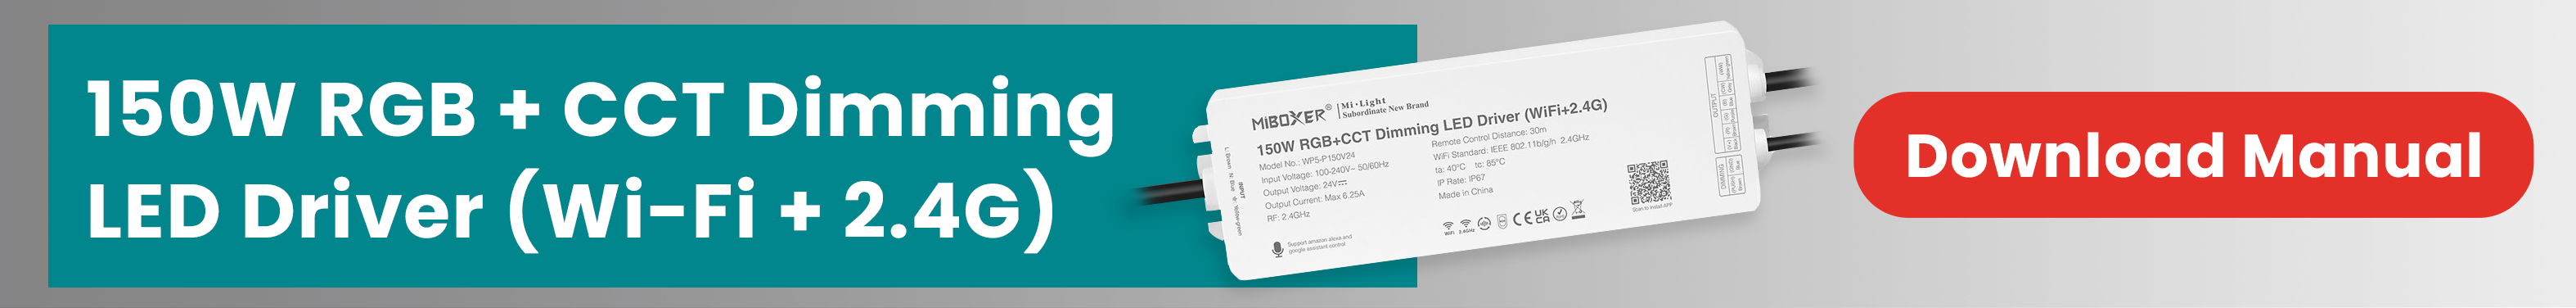 EasiLight 150W RGB + CCT Dimming LED Driver (Wi-Fi + 2.4G) Manual